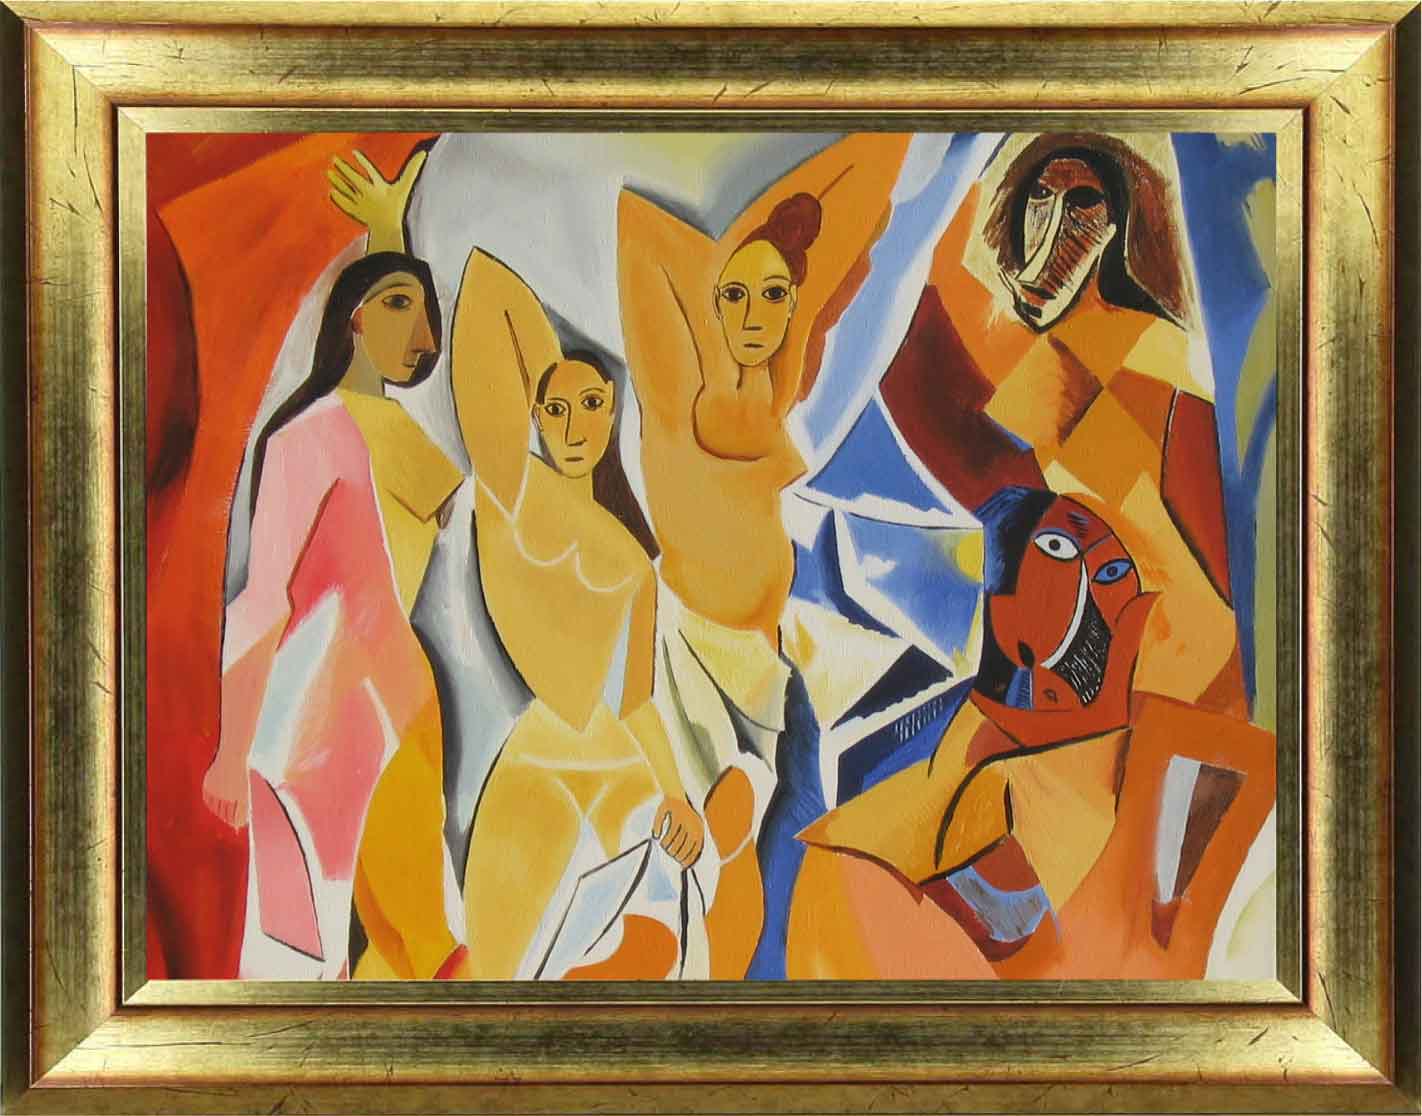 Wandtattoo malerei Picasso – Les Demoiselles d'Avignon